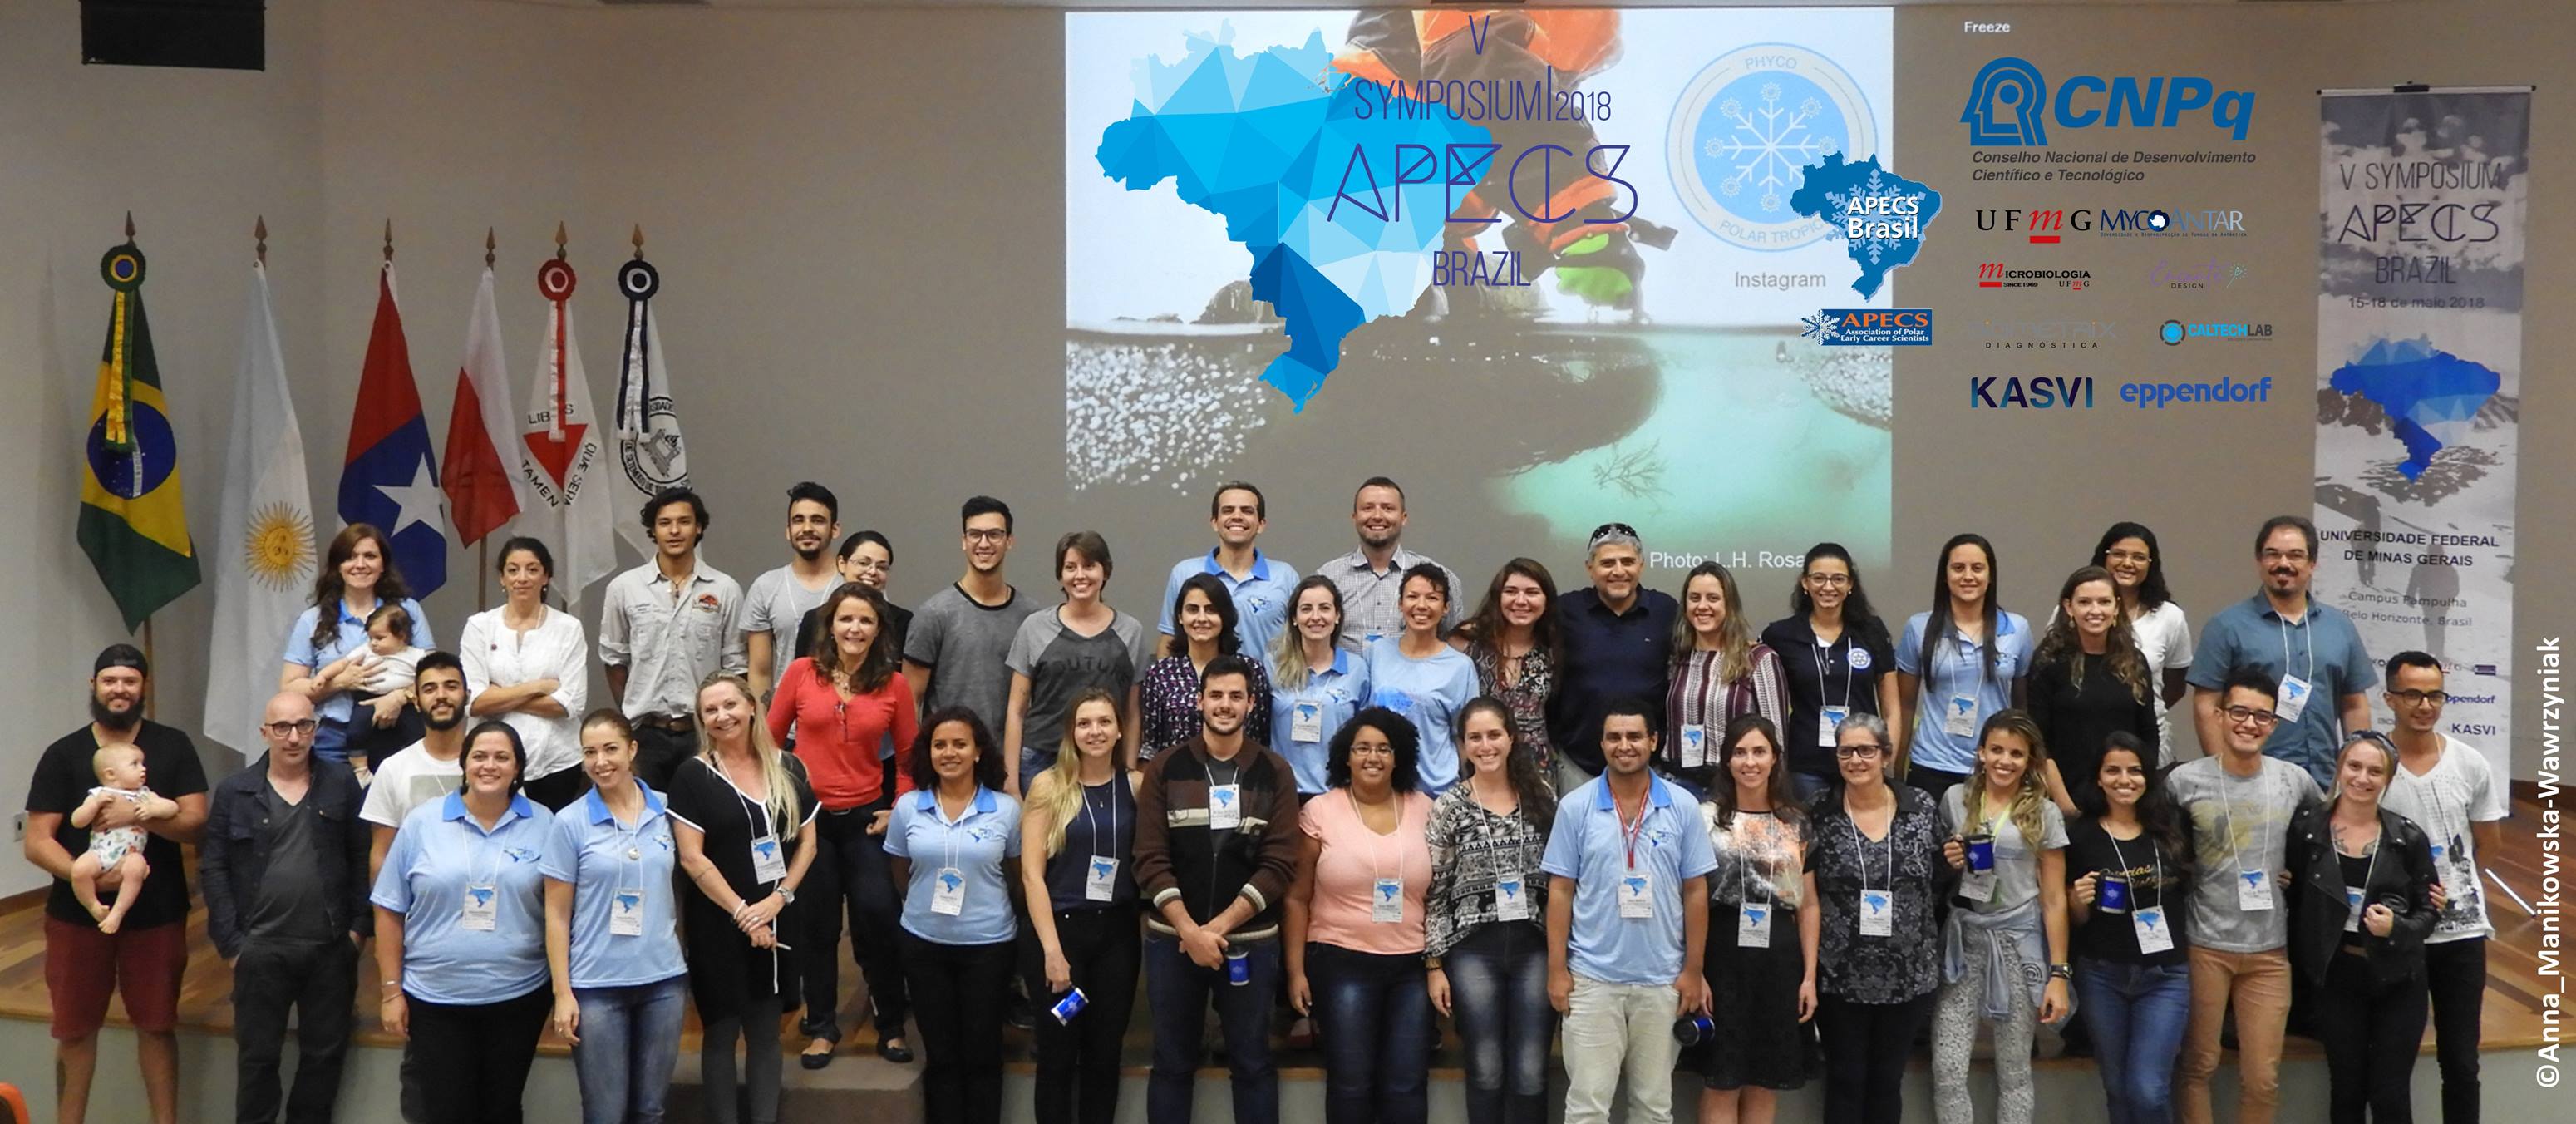 V Symposium APECS-Brazil - Oficial picture.jpg